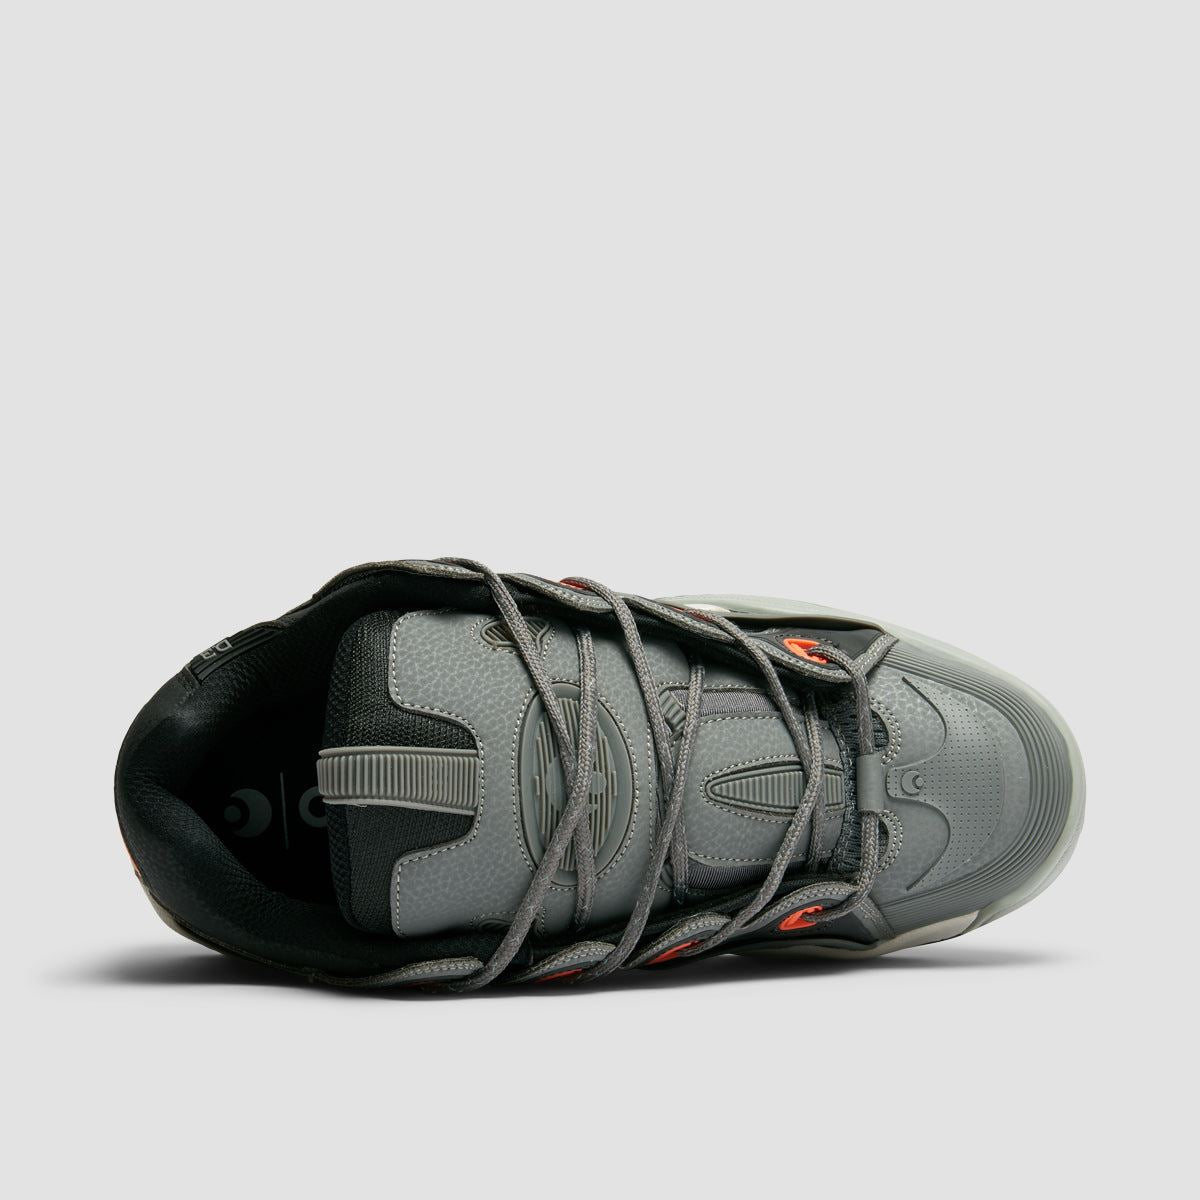 Osiris D3 2001 Shoes - Charcoal/Orange/Black